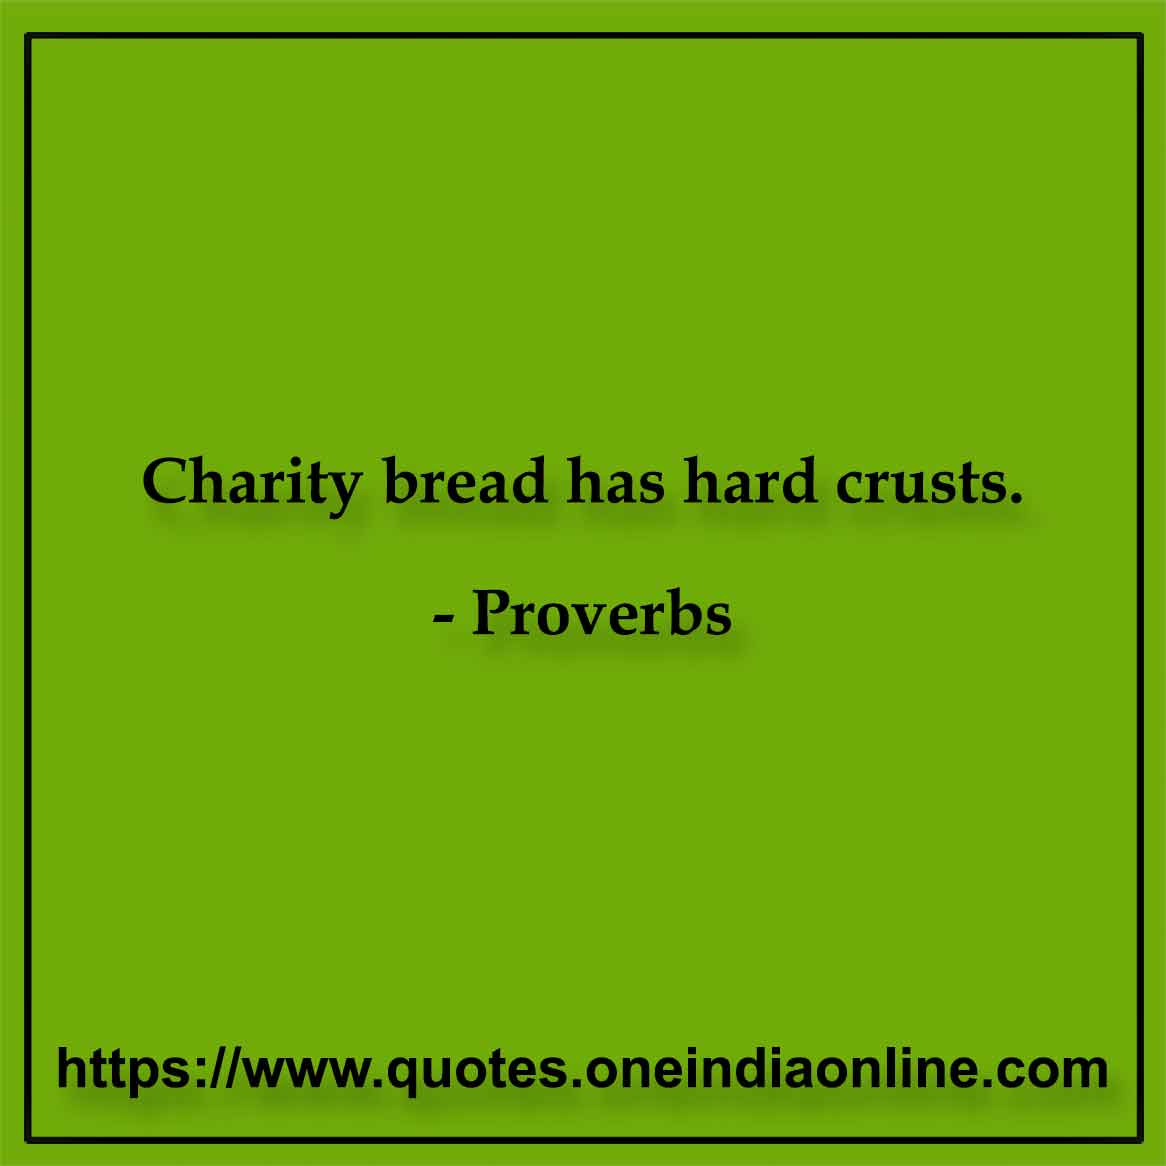 Charity bread has hard crusts.

